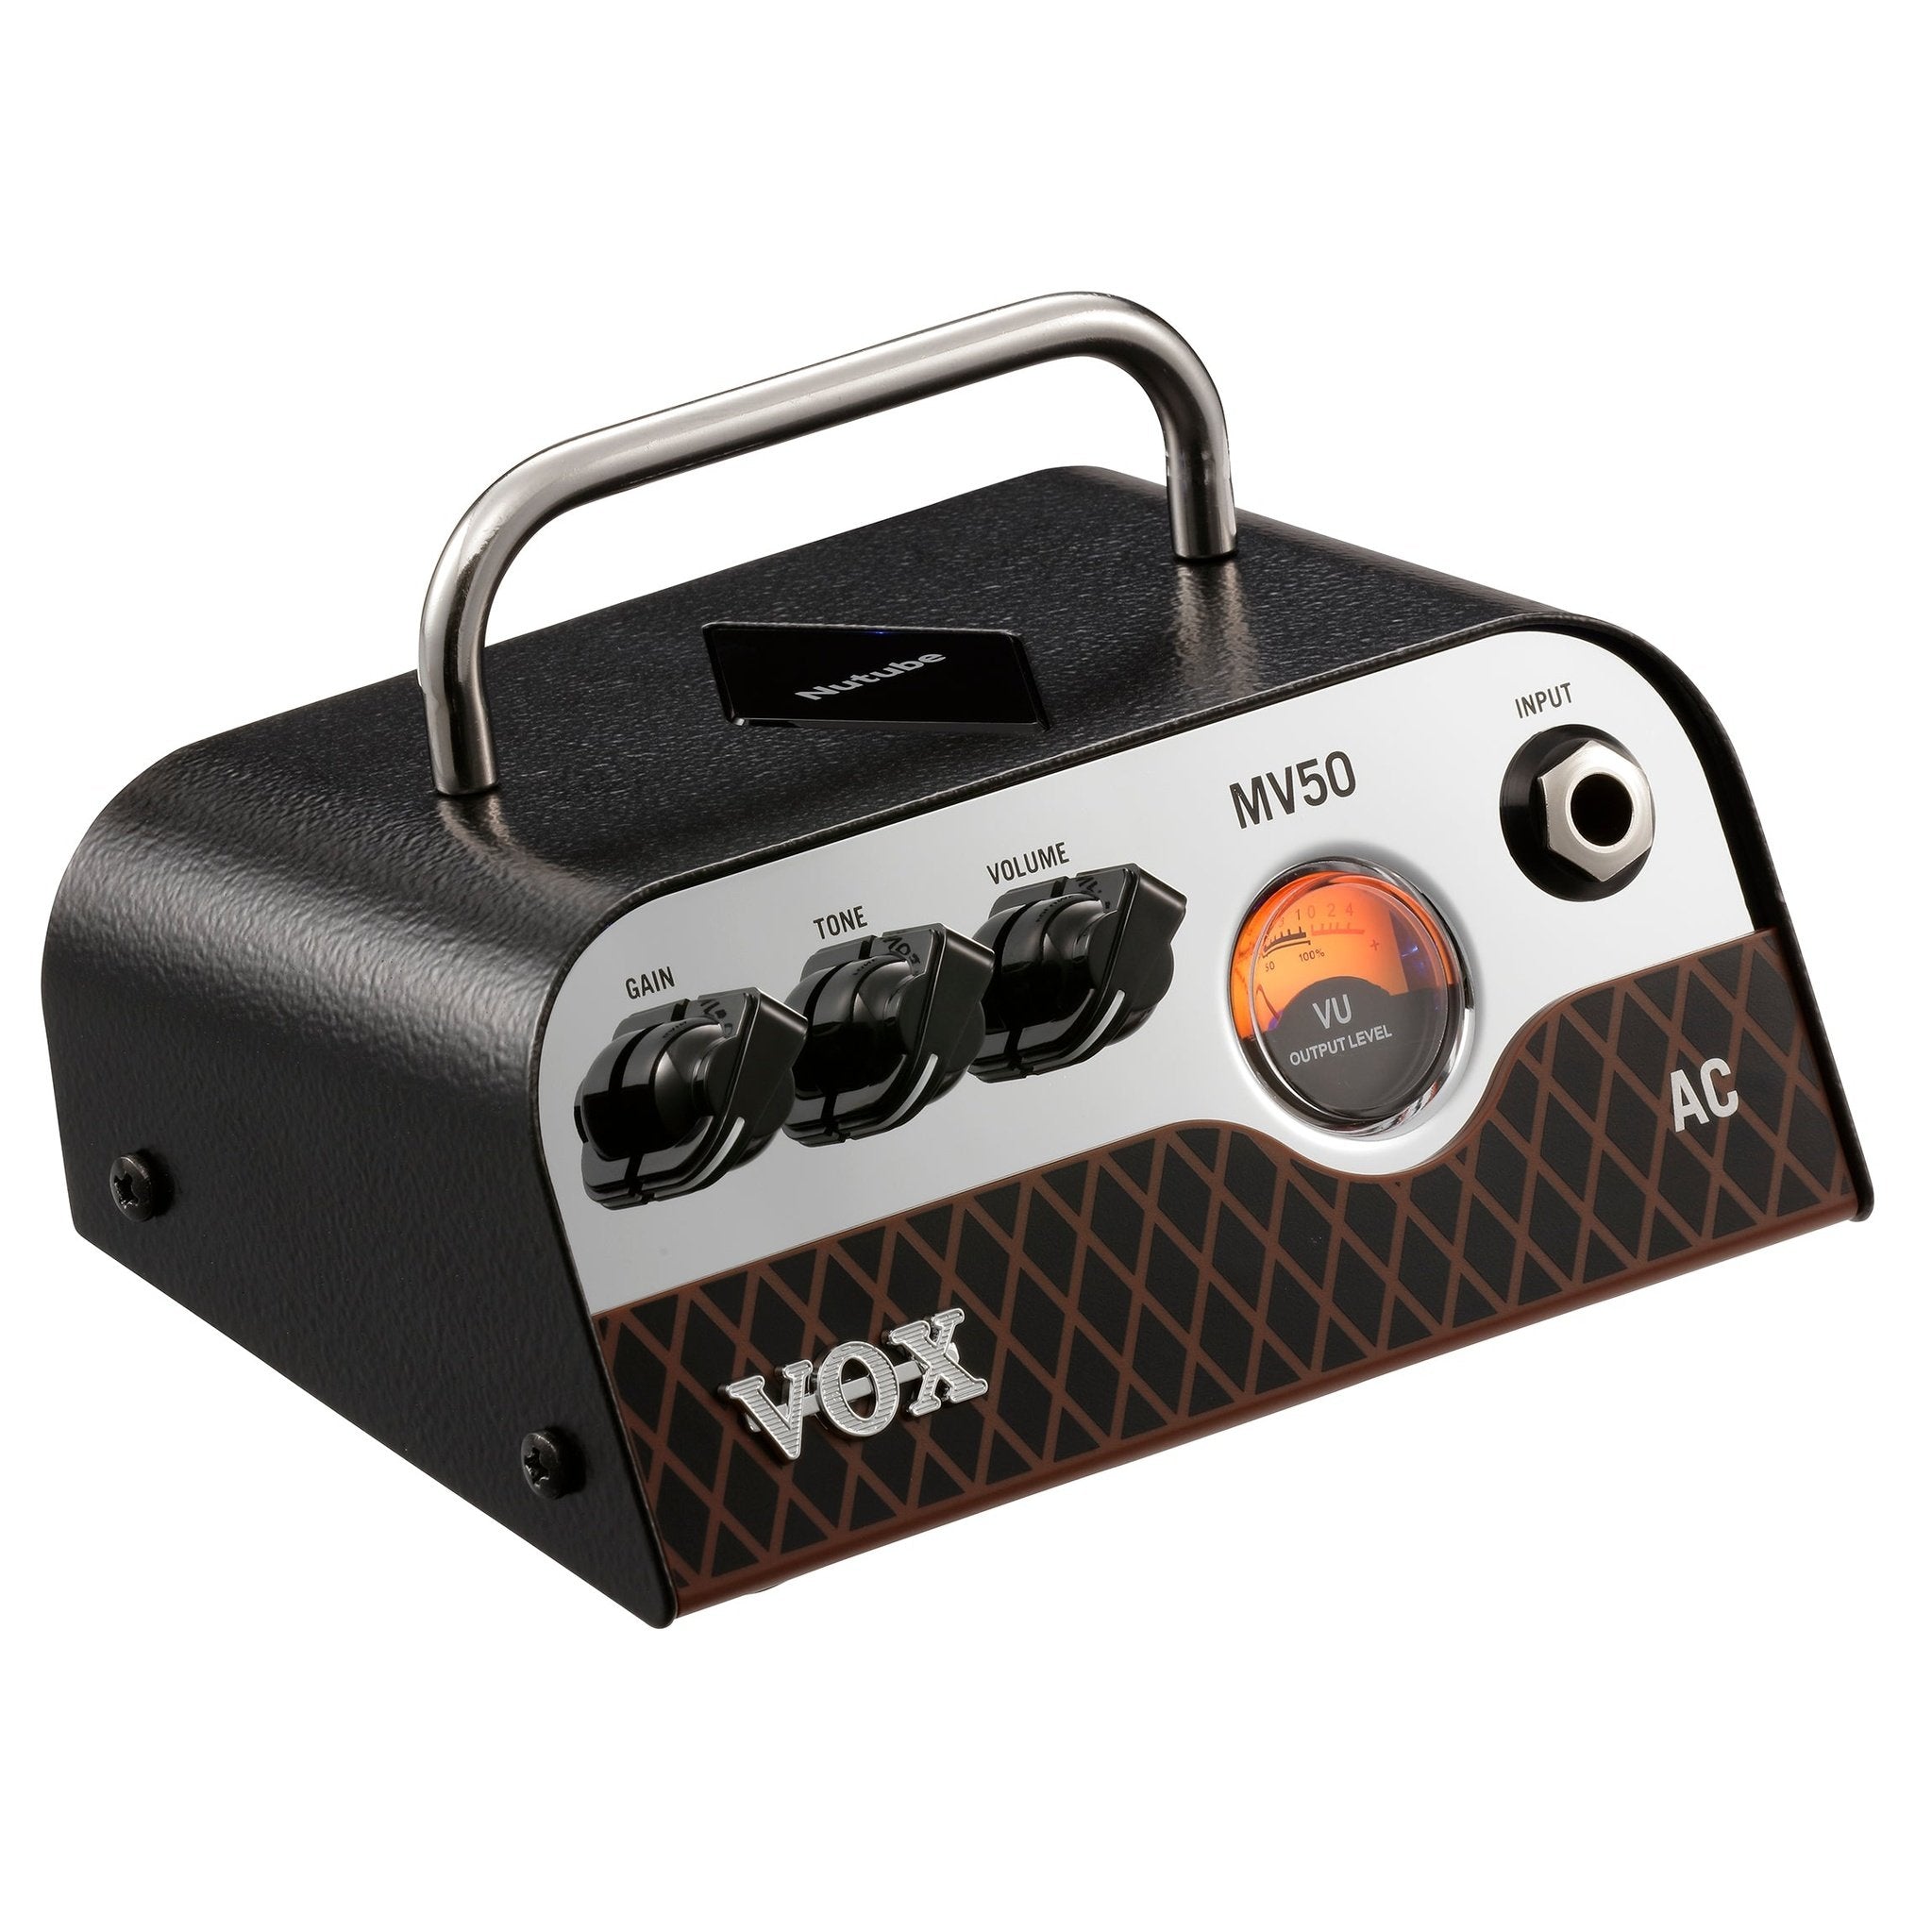 Vox MV50 Guitar Amp Head - AC 3